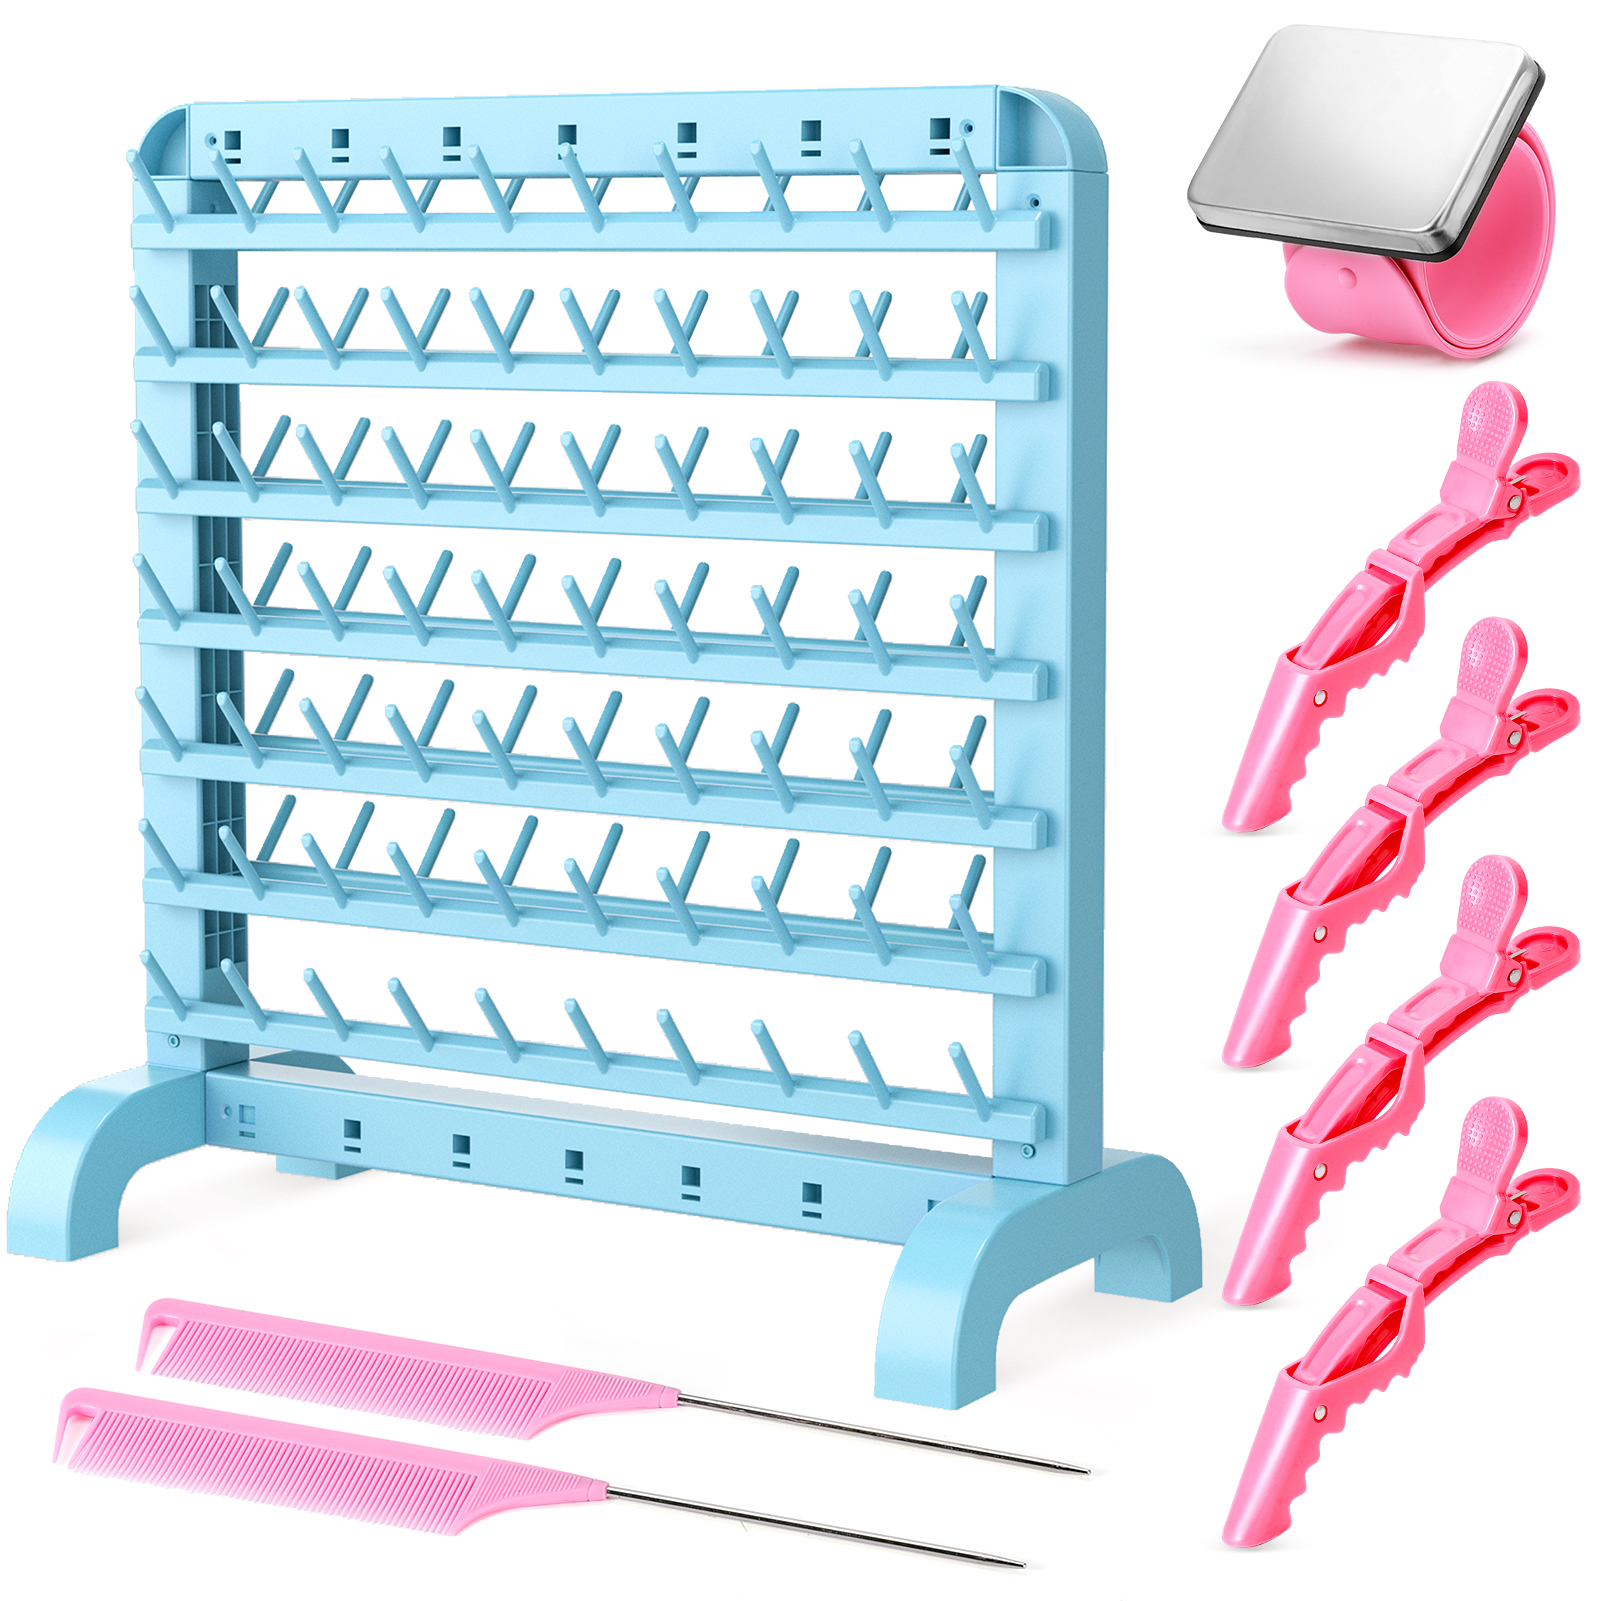 Braiding Hair Rack Hair Separator Extension Stand for Home Hair Stylist